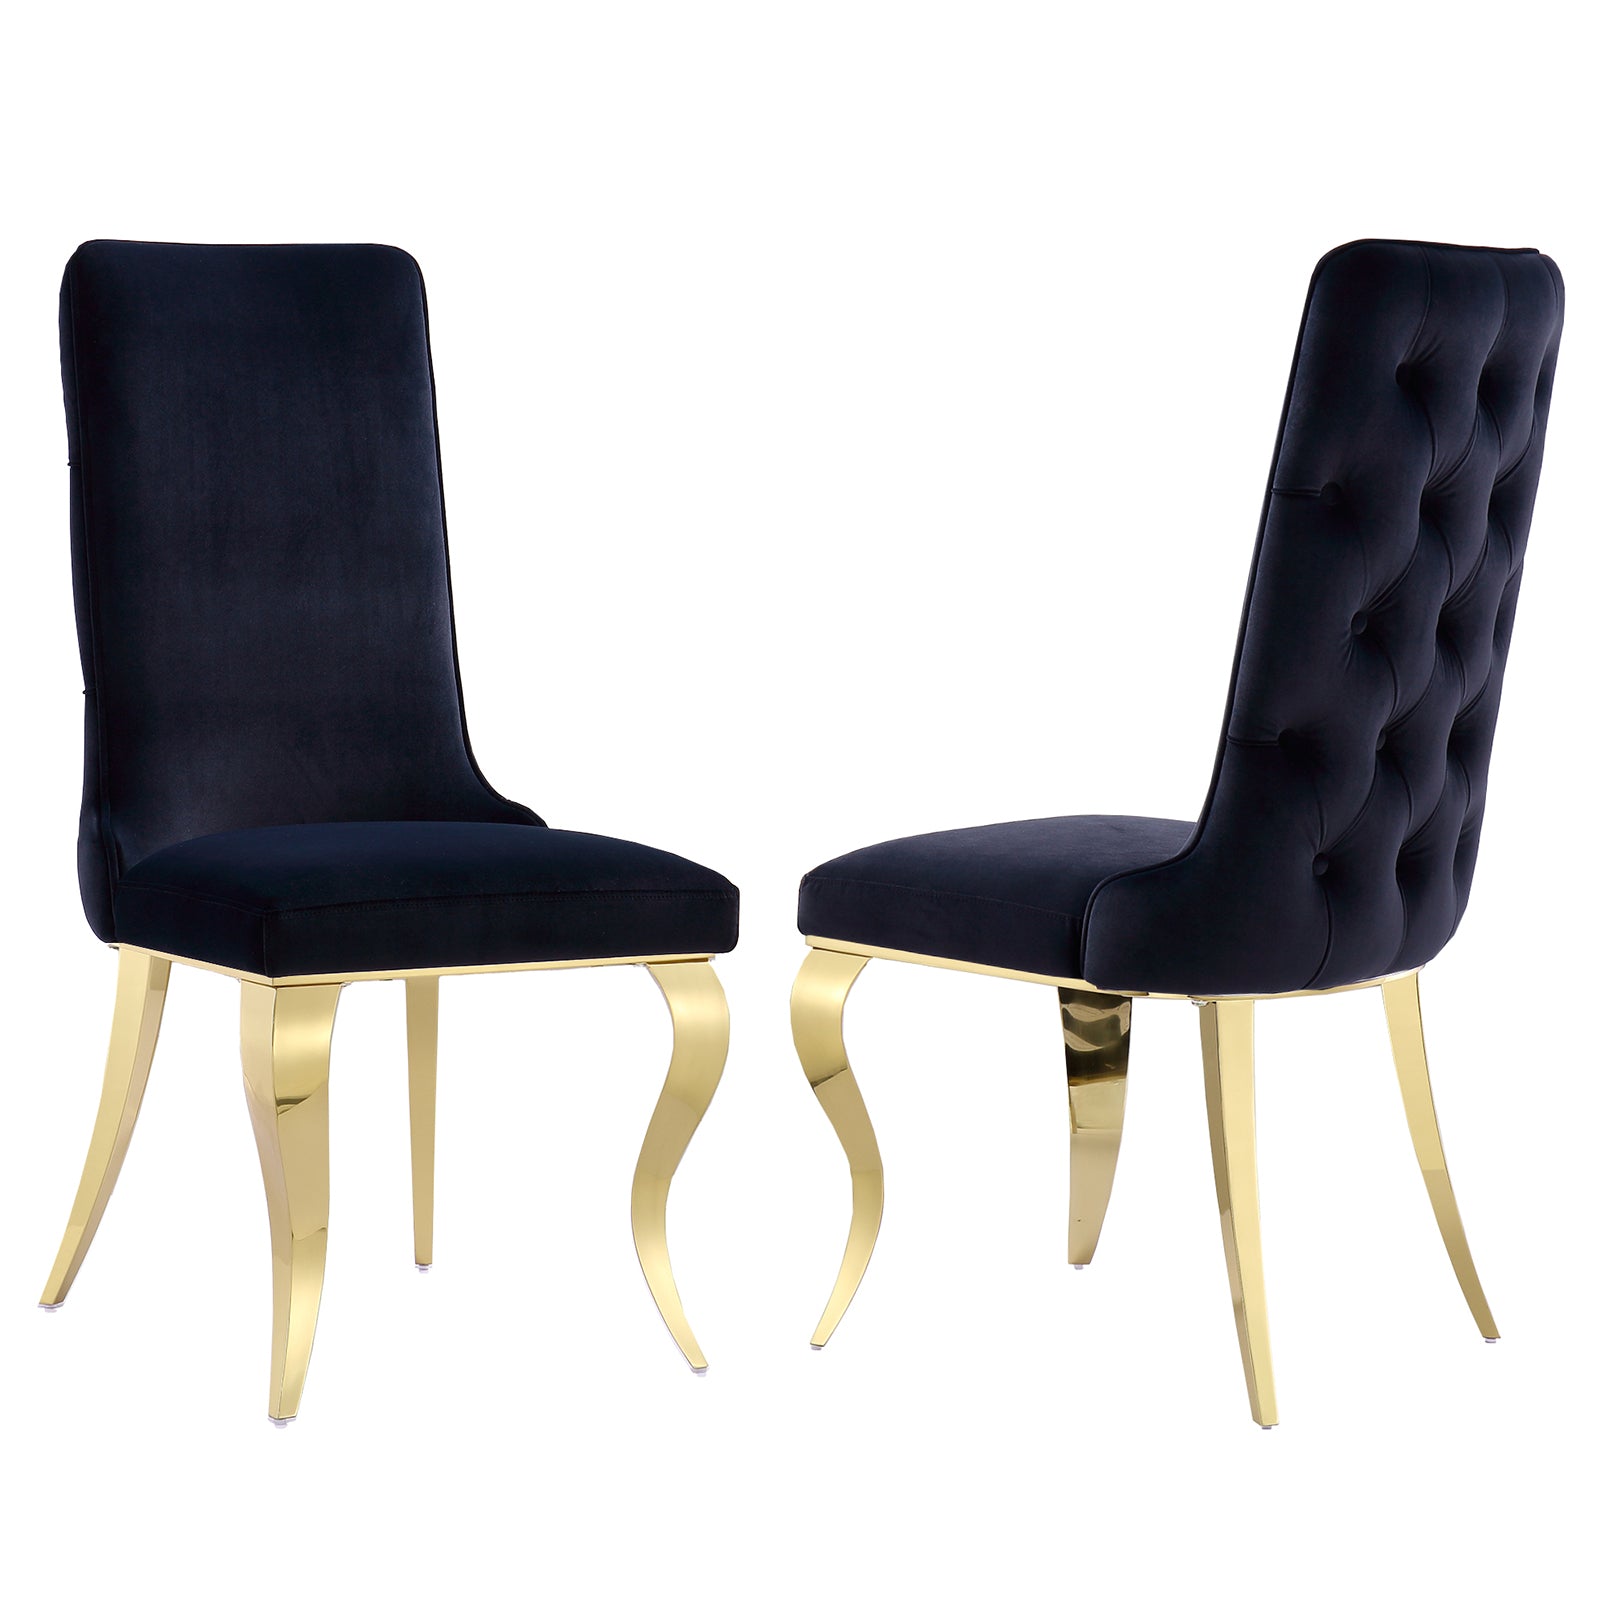 Black velvet Dining Chairs | Button Back | Heavy duty | Gold metal legs | C164